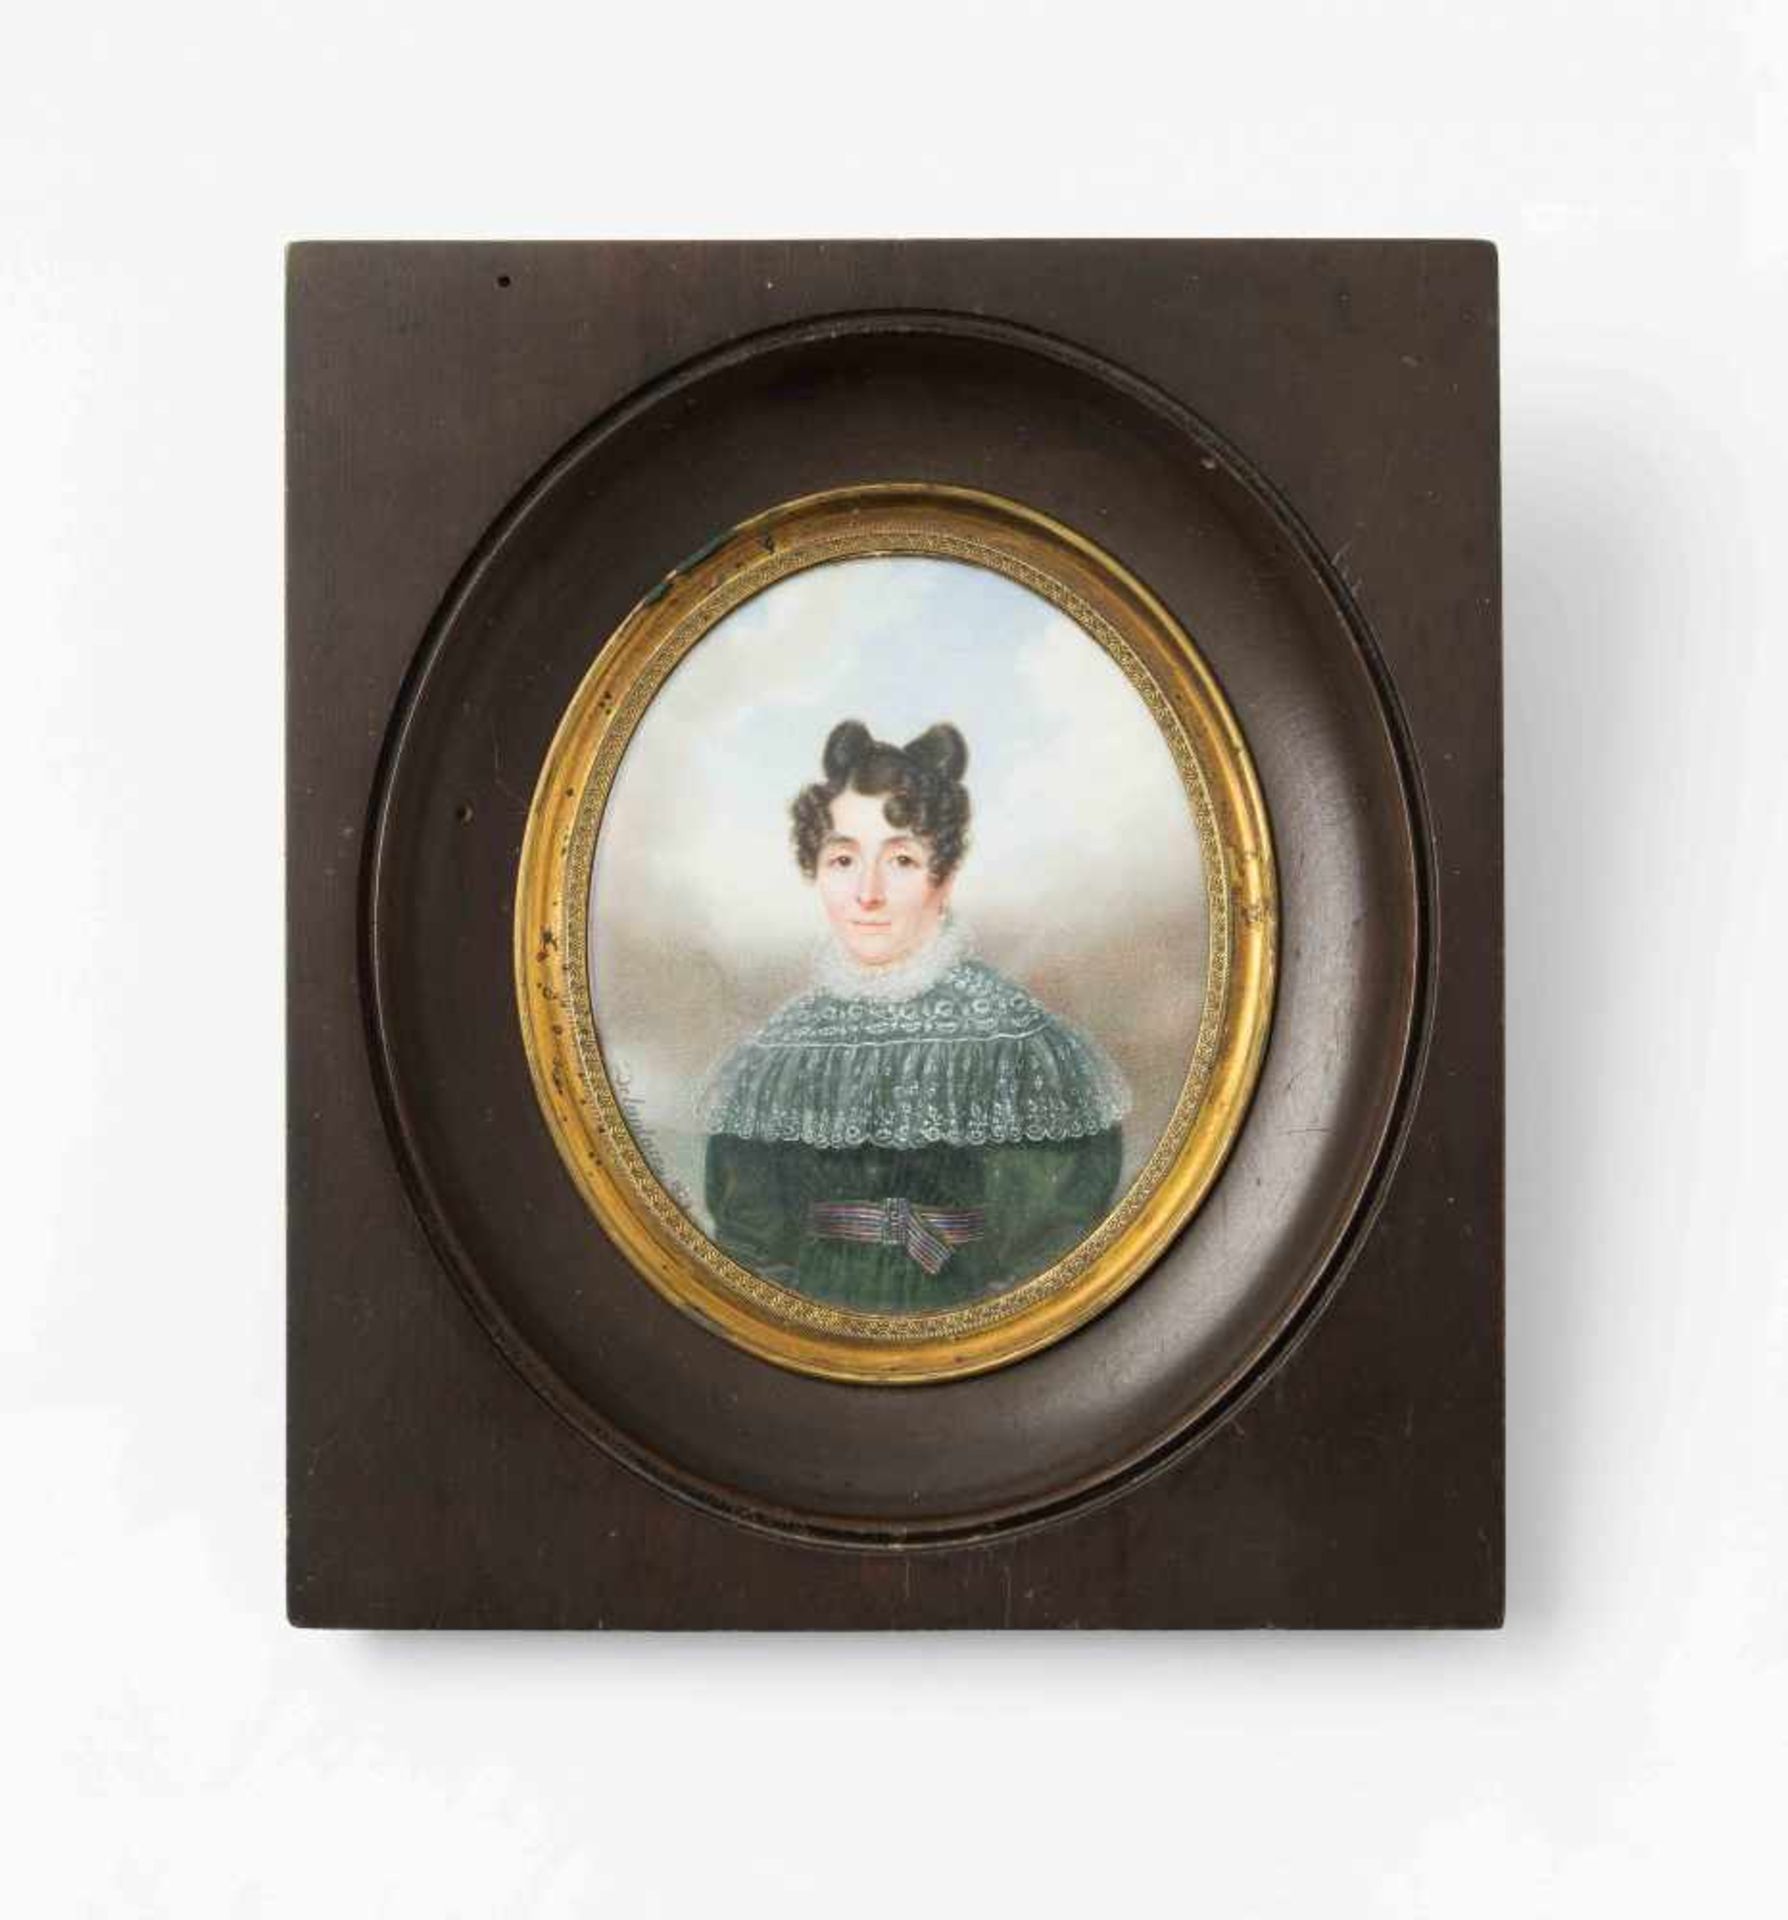 Damenporträt, Gouache auf Elfenbein, oval, links signiert und datiert Delaplace 1829, (Jacques